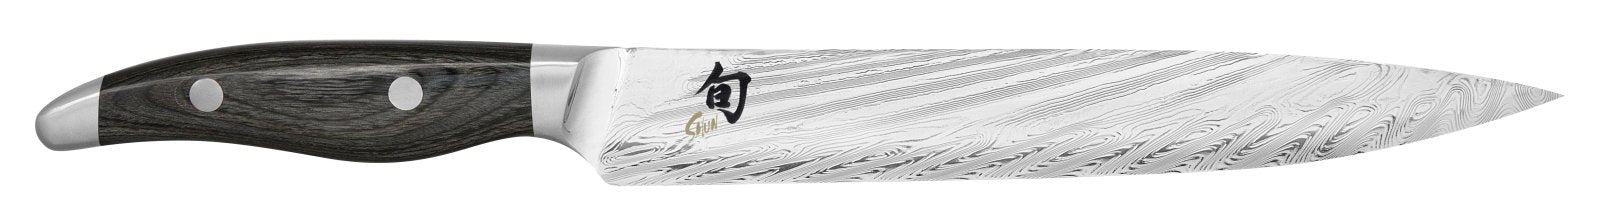 KAI Shun Nagare 23cm Slicing Knife - KAI-NDC-0704 - The Cotswold Knife Company